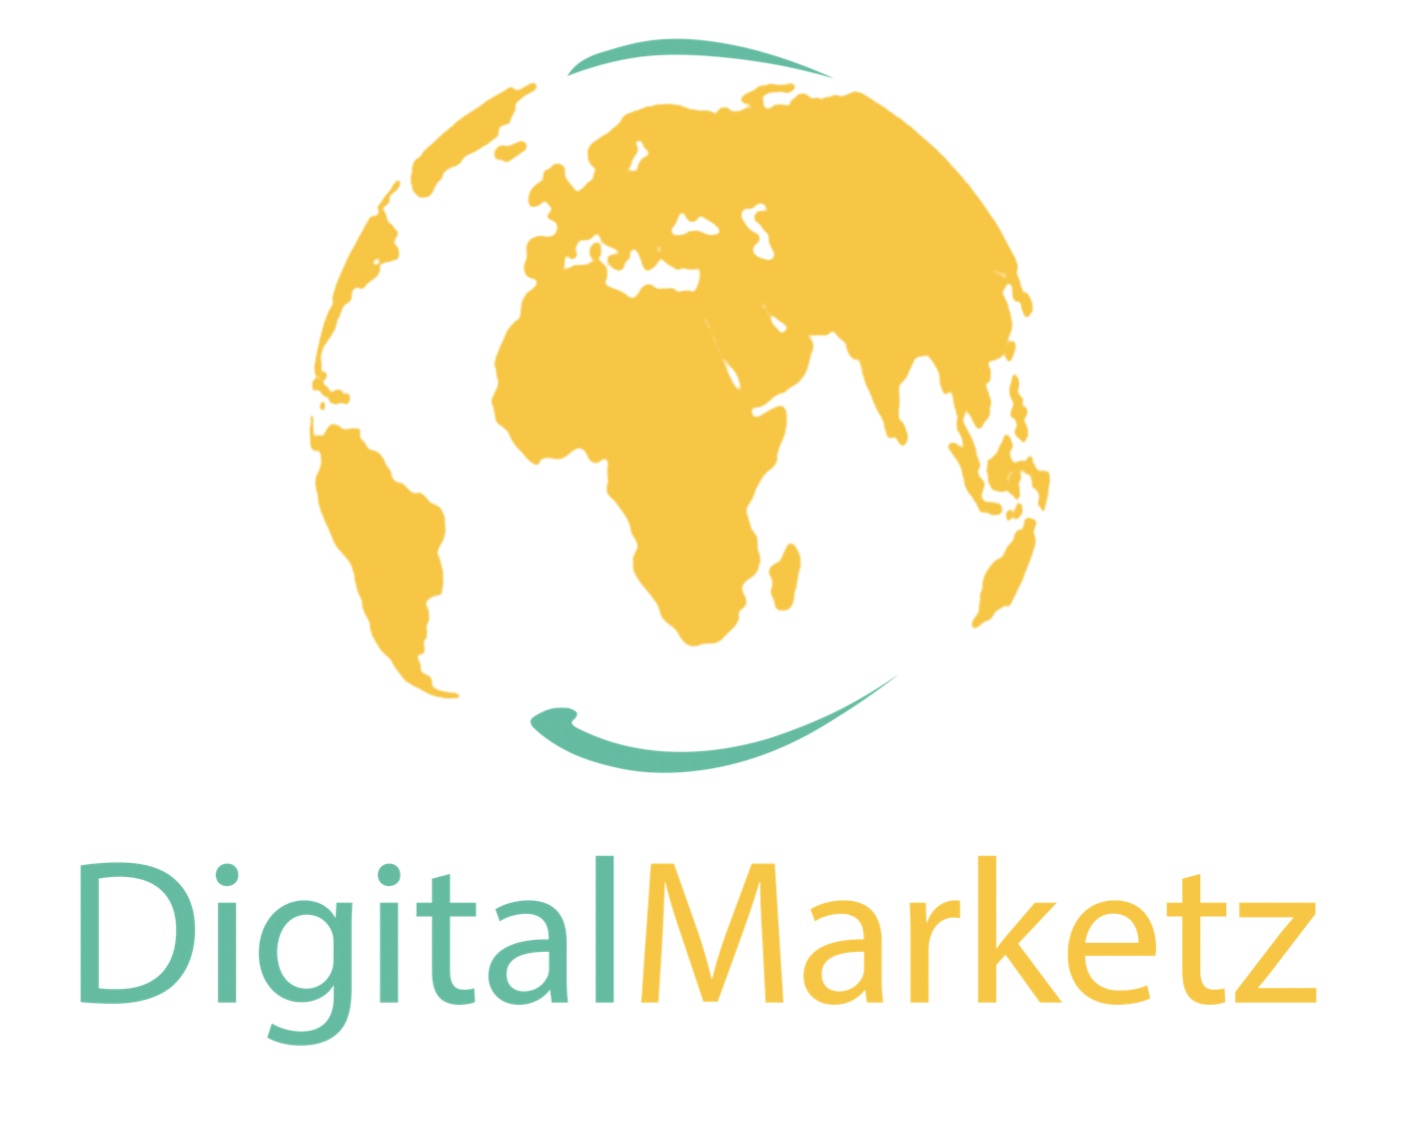 Digital Marketz